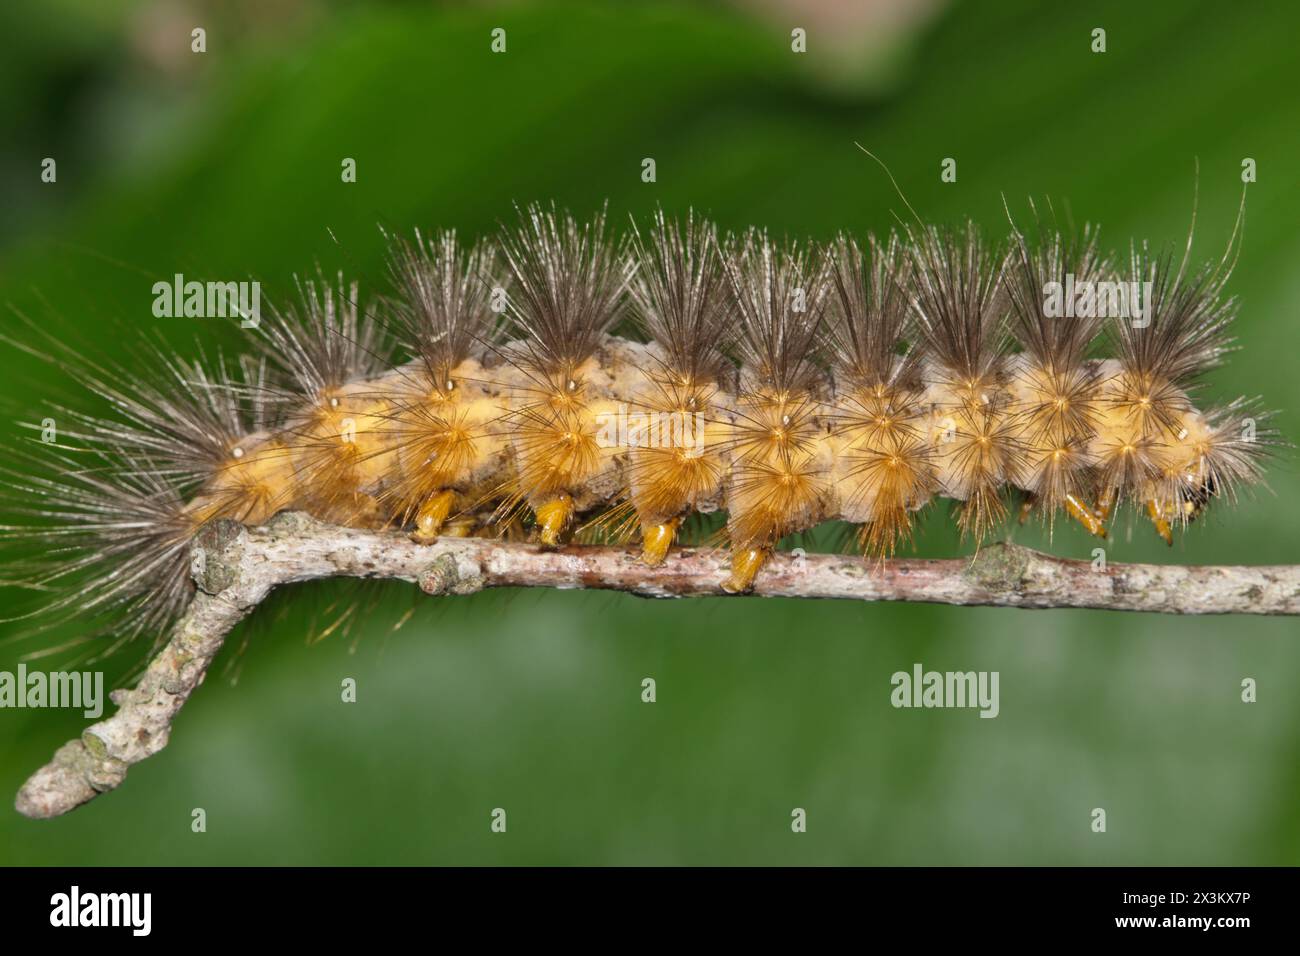 Salzmotte raupe (Estigmene acrea) Insekt auf pflanzlicher Fuzzy Natur Frühjahrsbekämpfung. Stockfoto